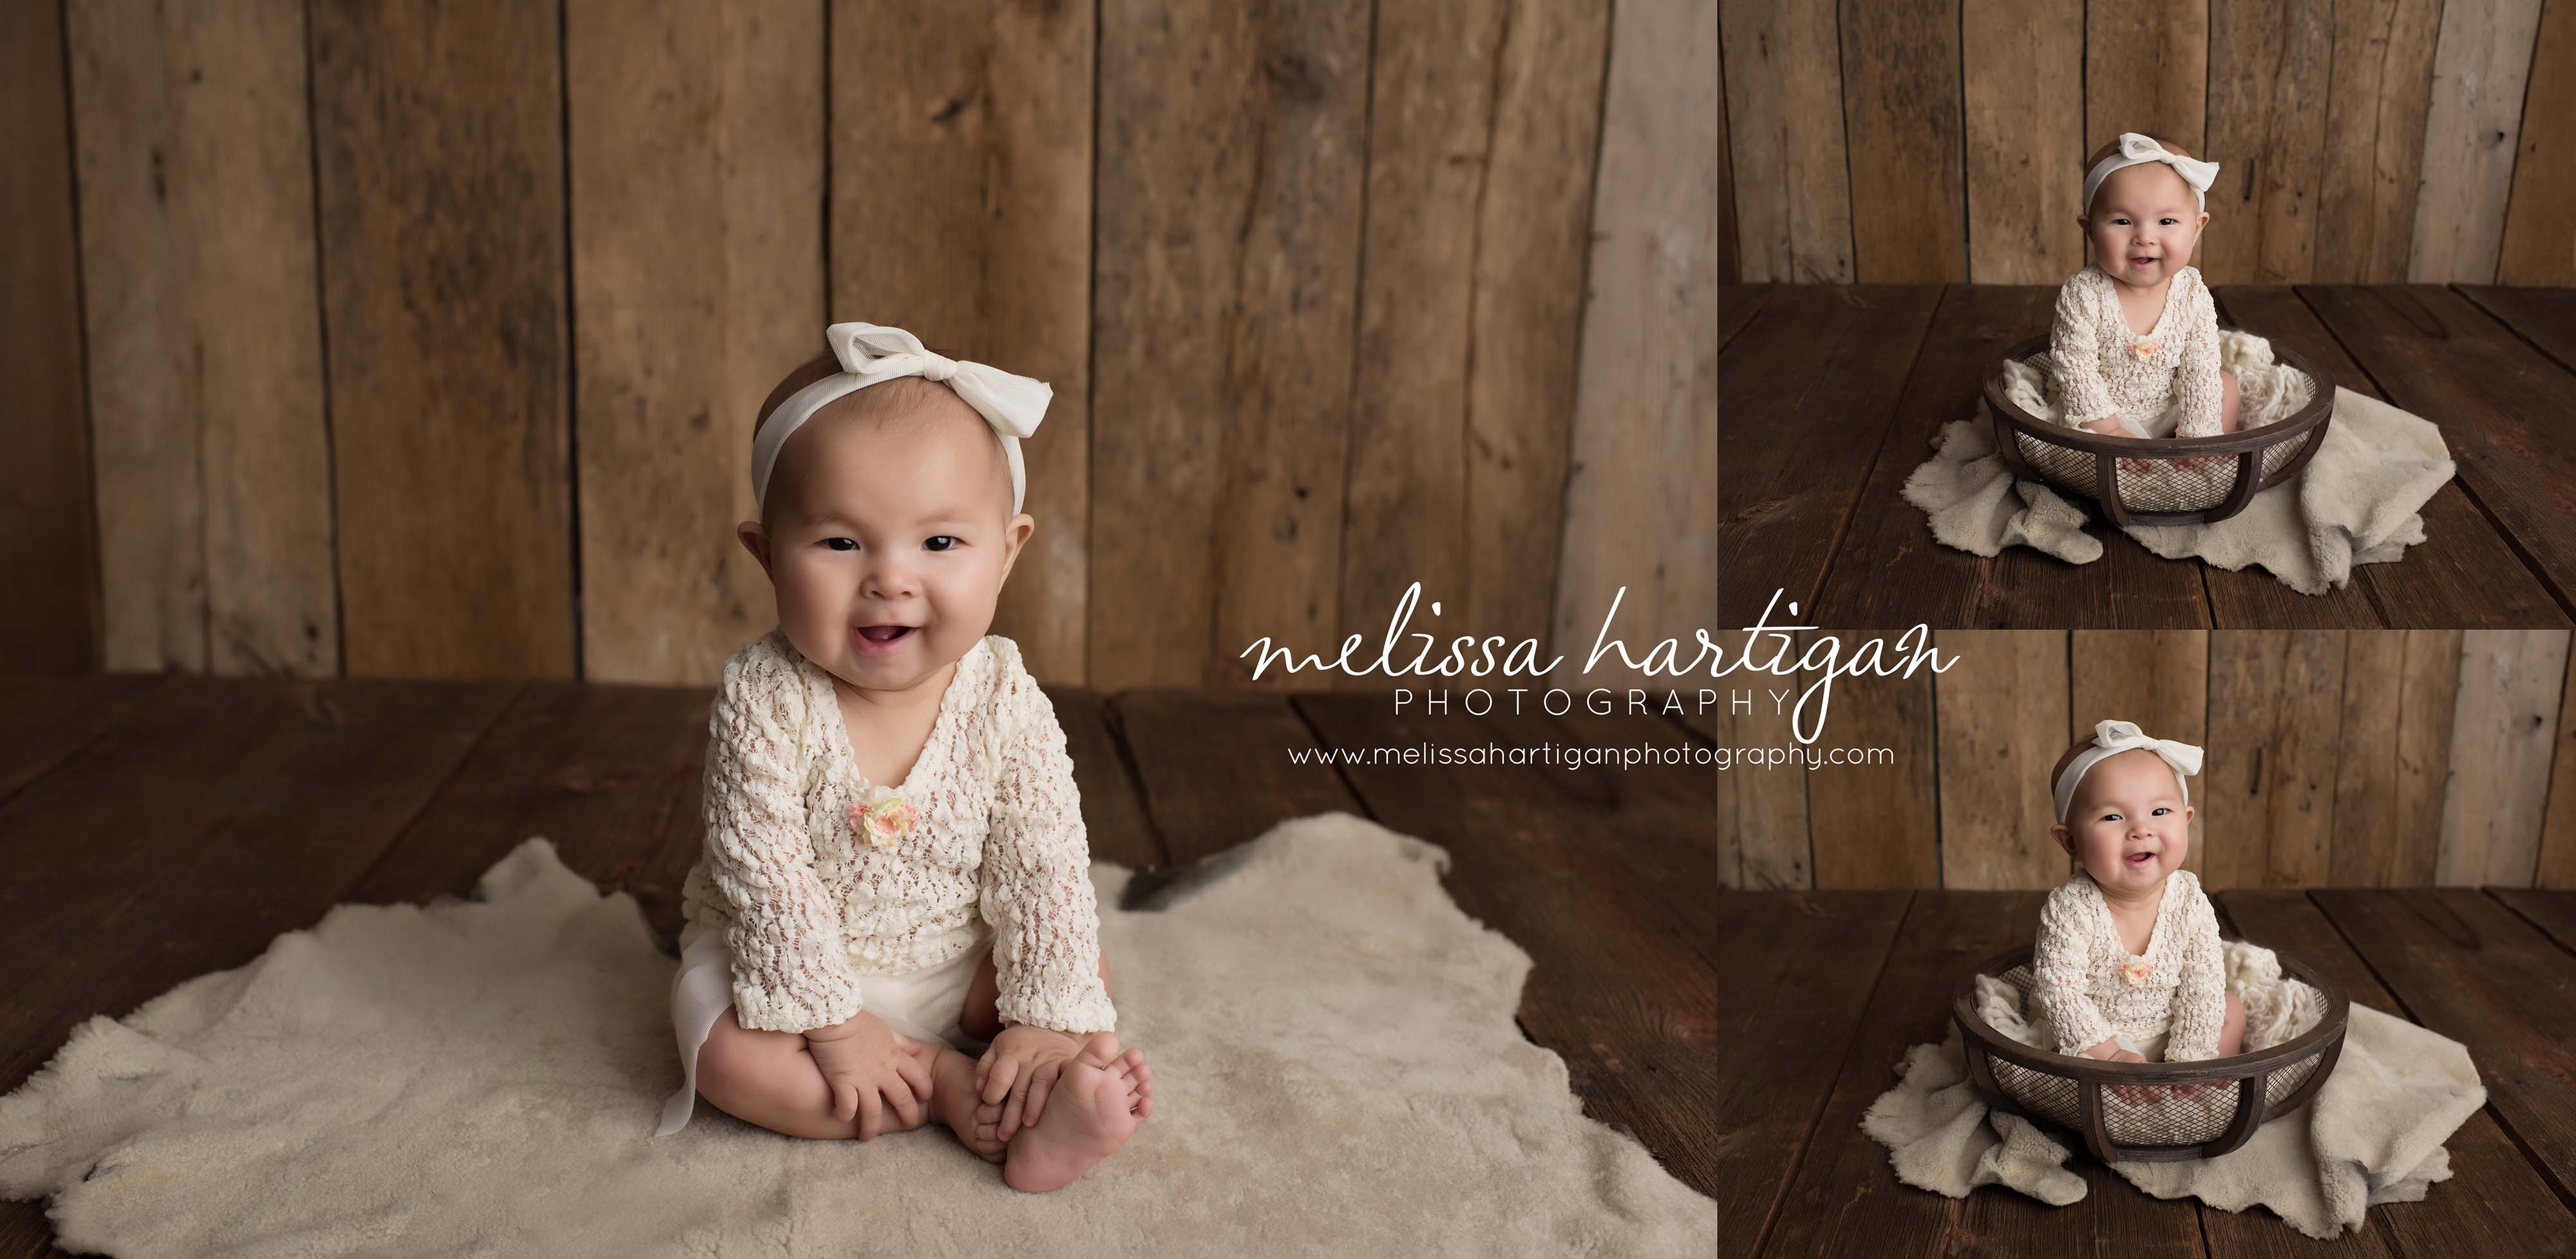 Makayla, 6 months, Ellington Connecticut Baby Milestone Photographer, Coventry CT, Melissa Hartigan Photography